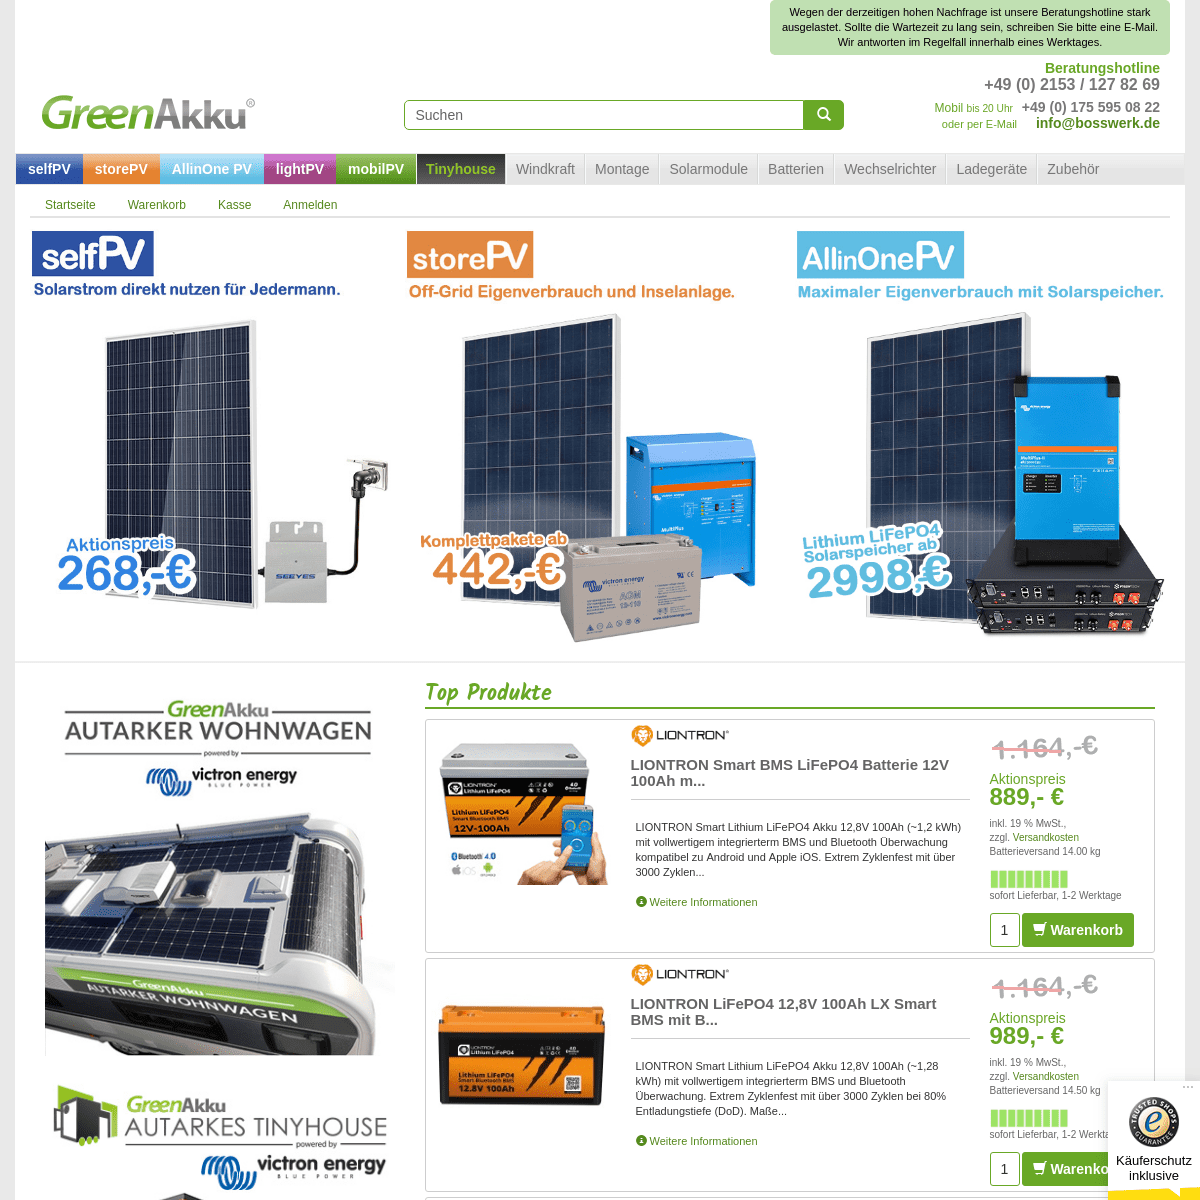 GreenAkku - Photovoltaik, Solaranlagen, Batterie, Akkus Shop